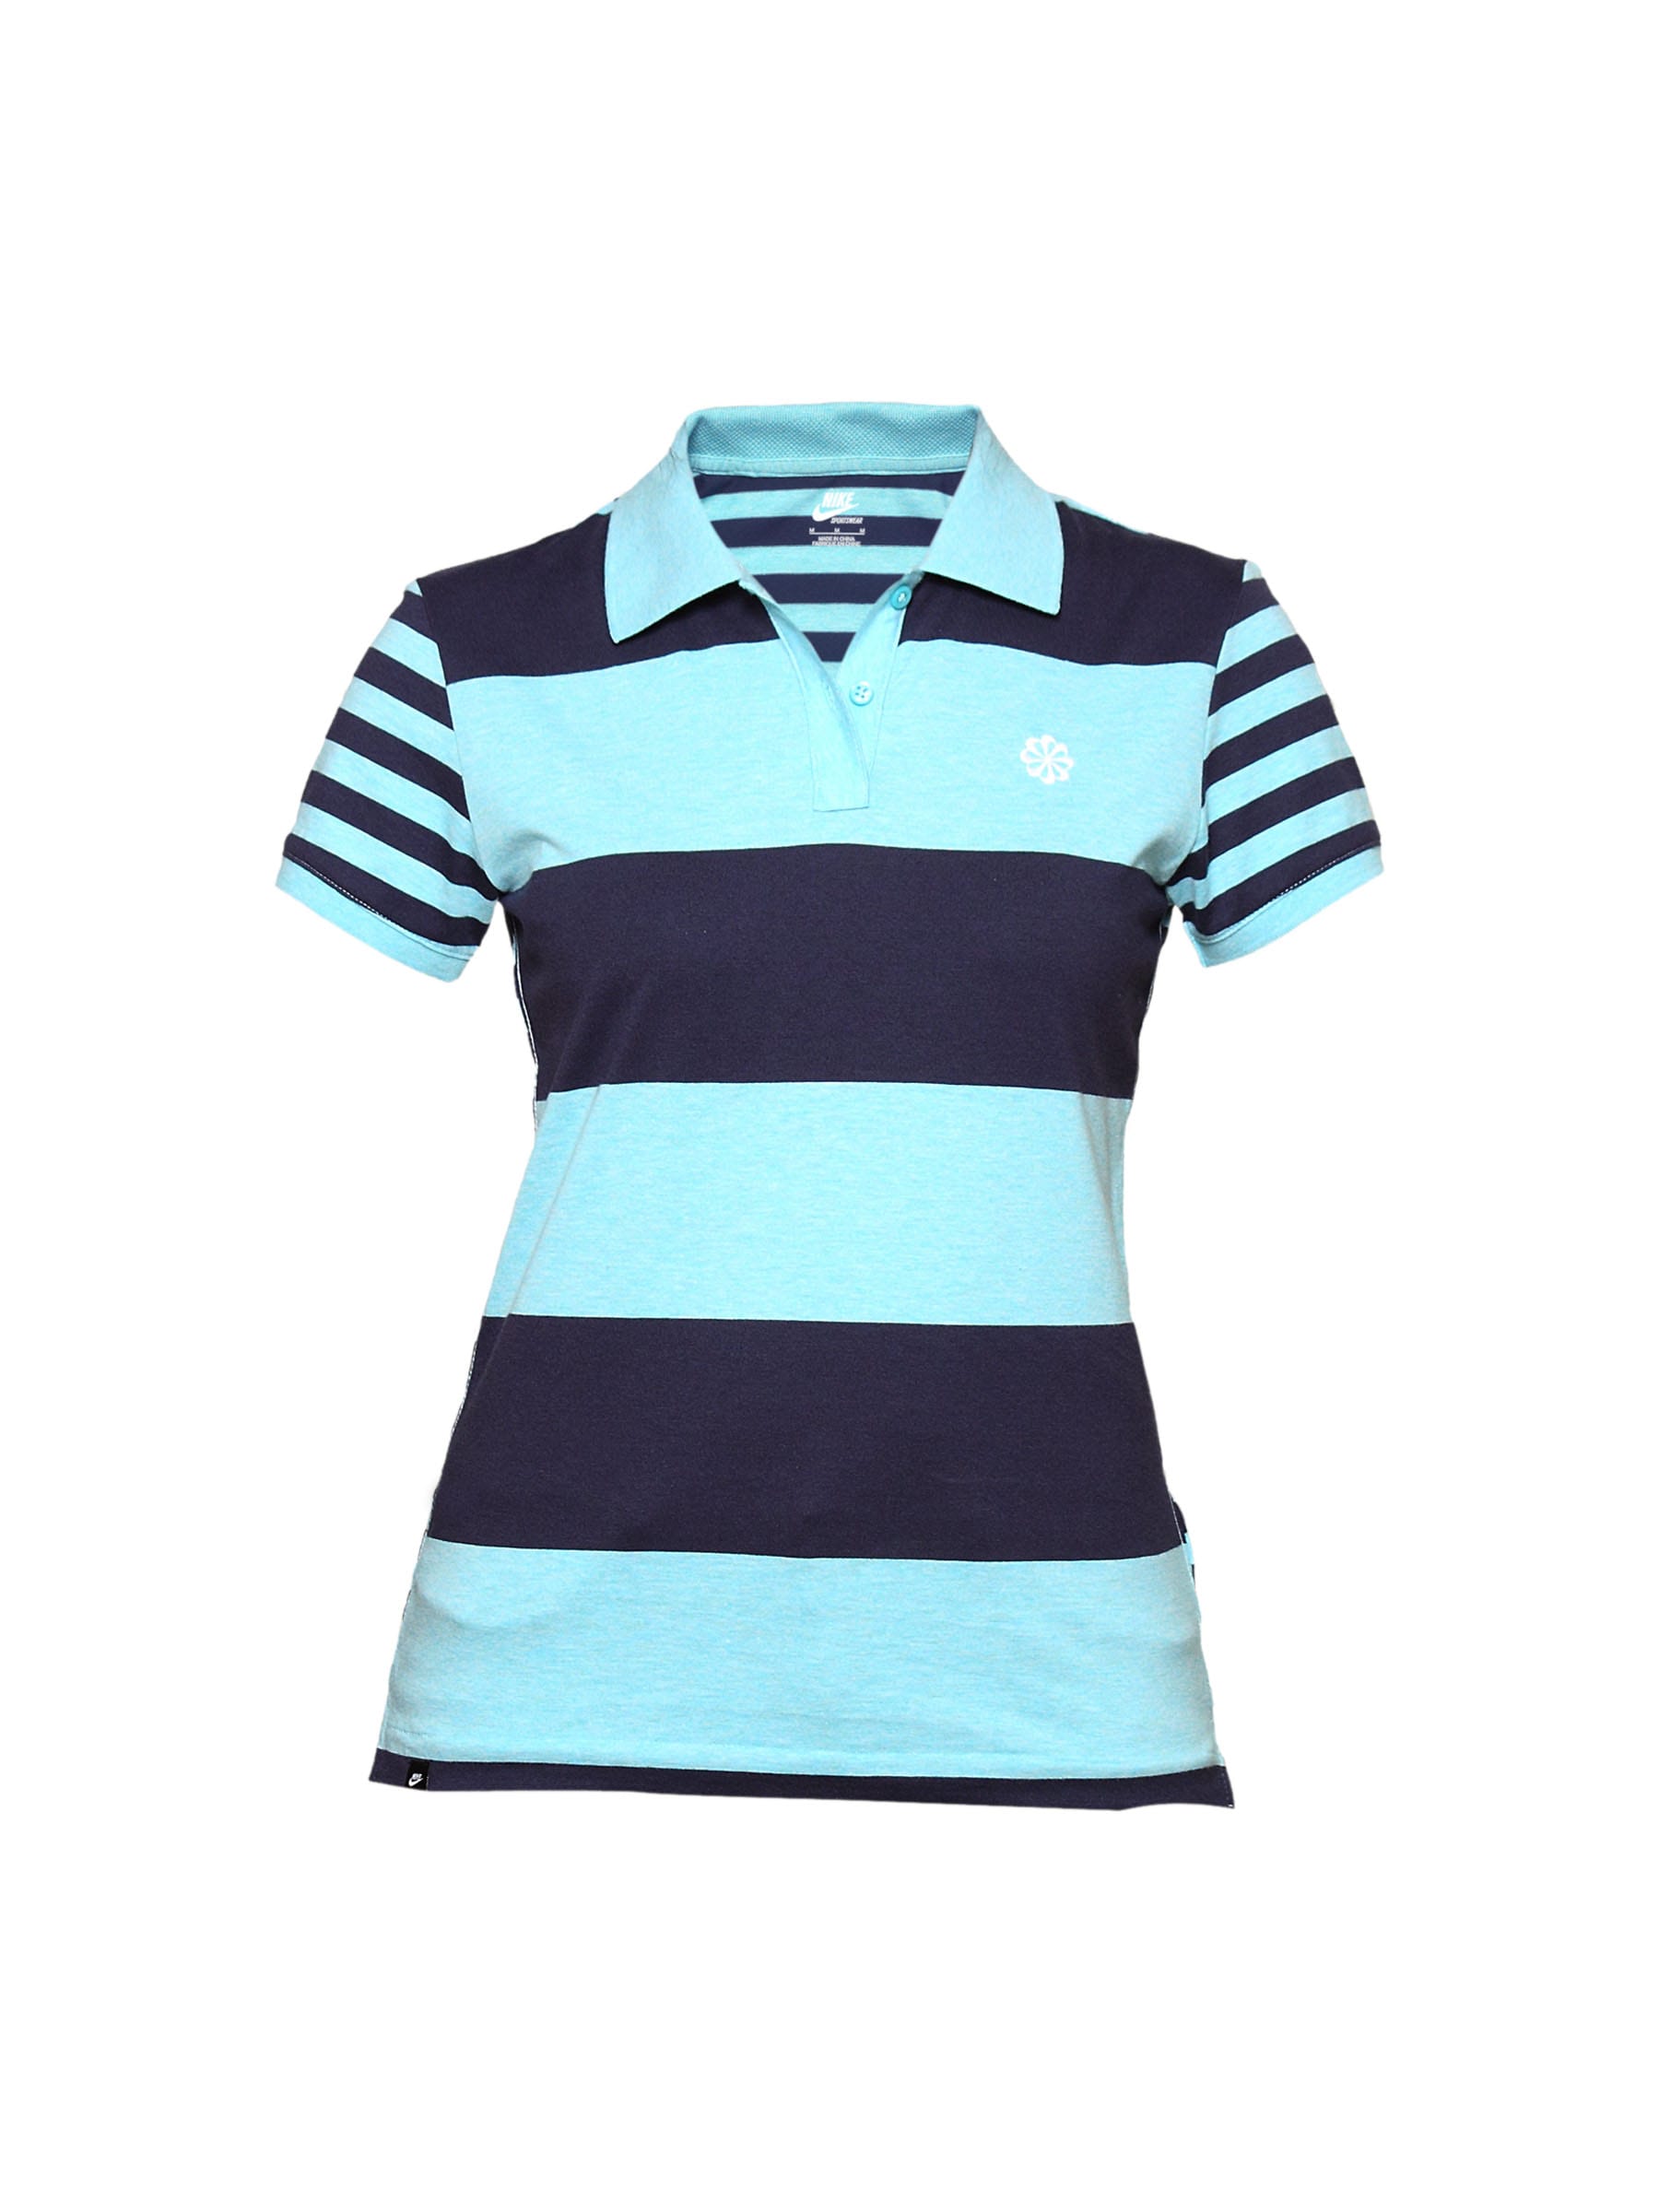 Nike Women's Striped Polo Blue T-shirt